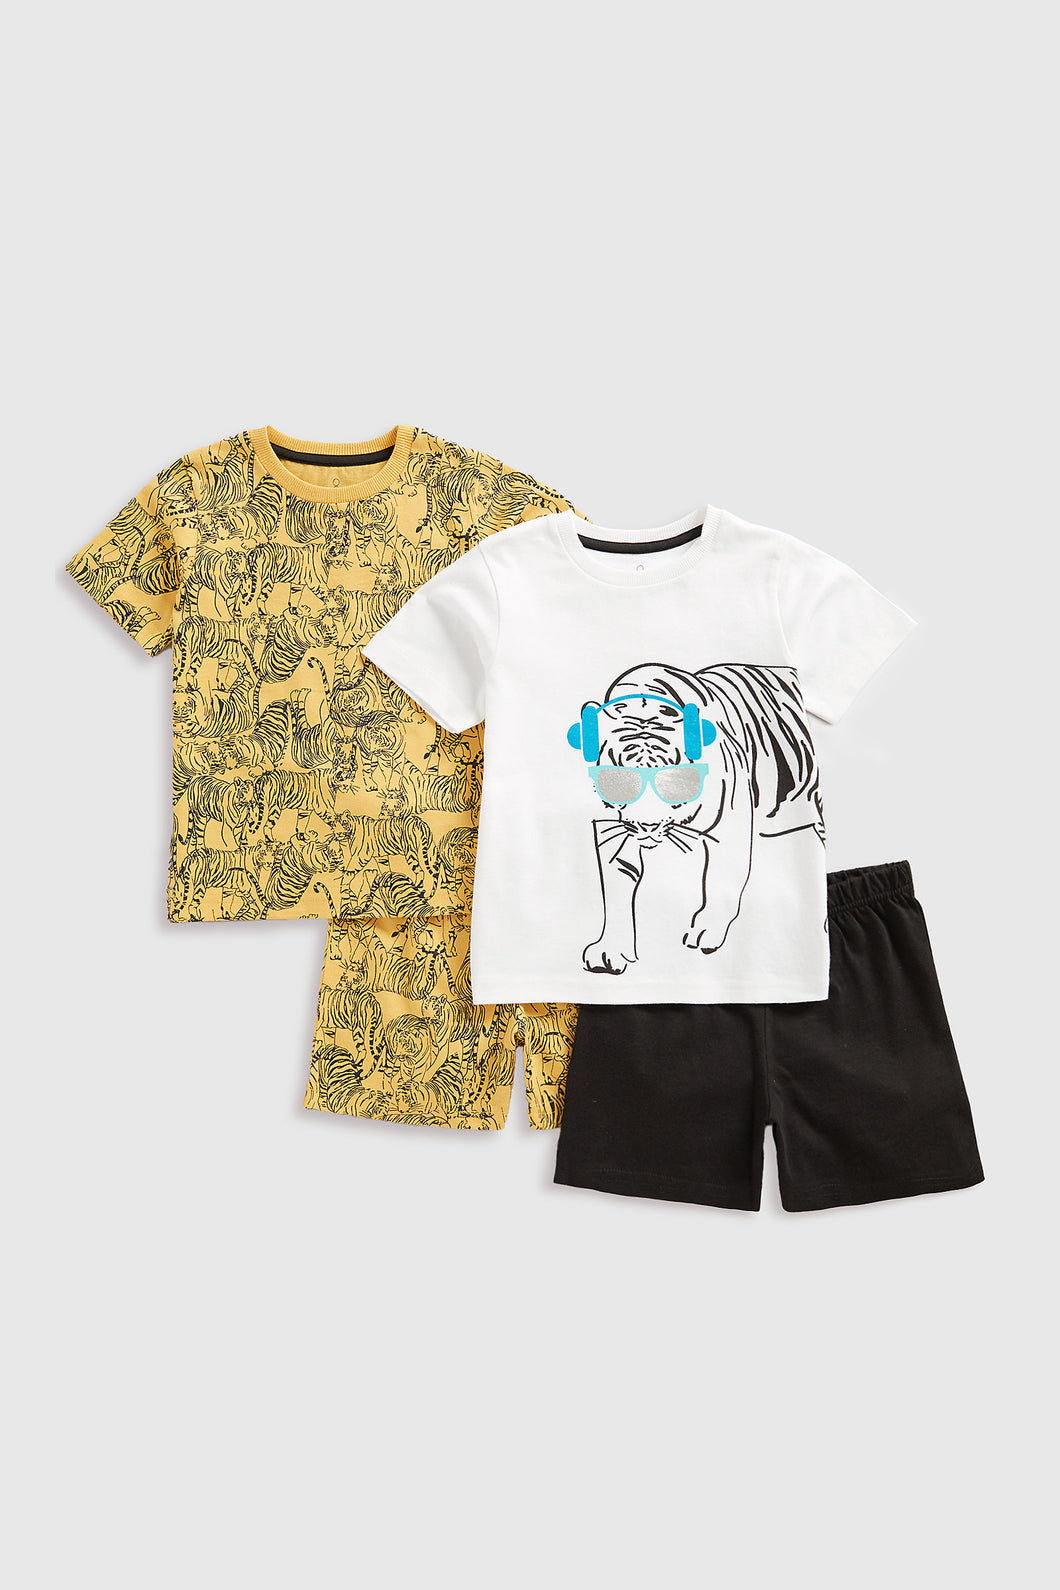 Mothercare Tiger Shortie Pyjamas - 2 Pack